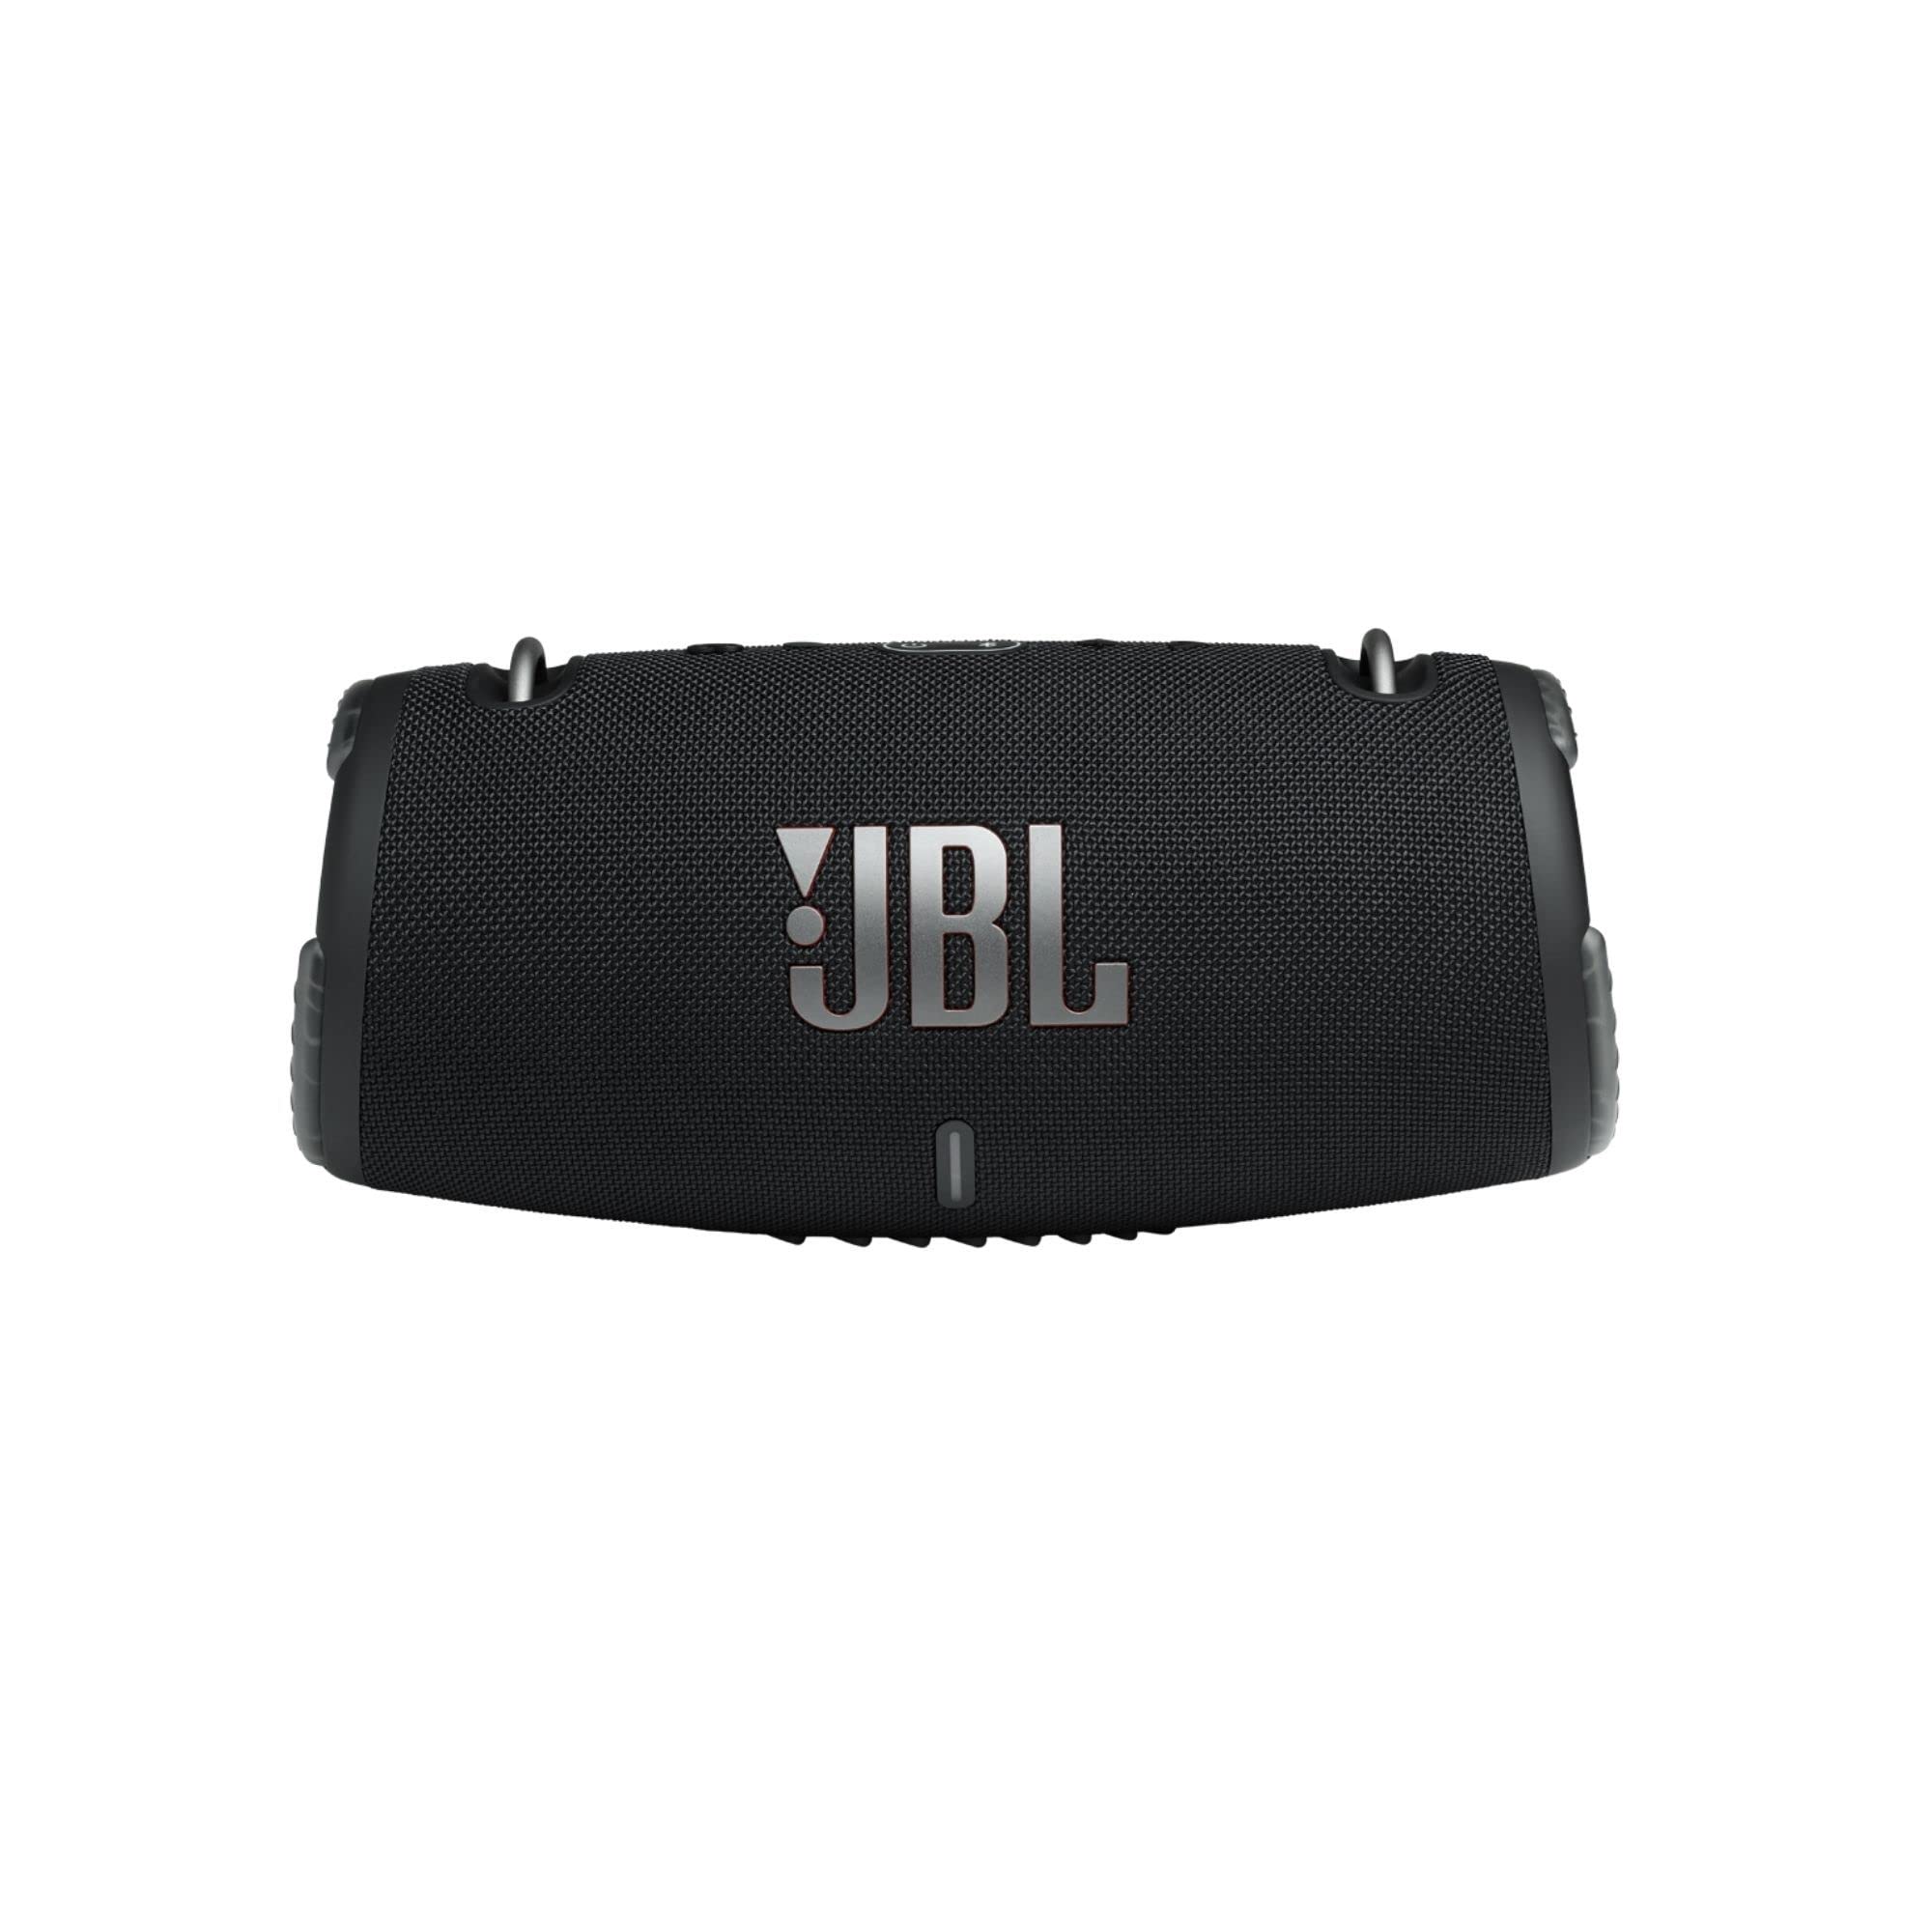 JBL Xtreme 3 - IP67 방수 기능을 갖춘 휴대용 블루투스 스피커...